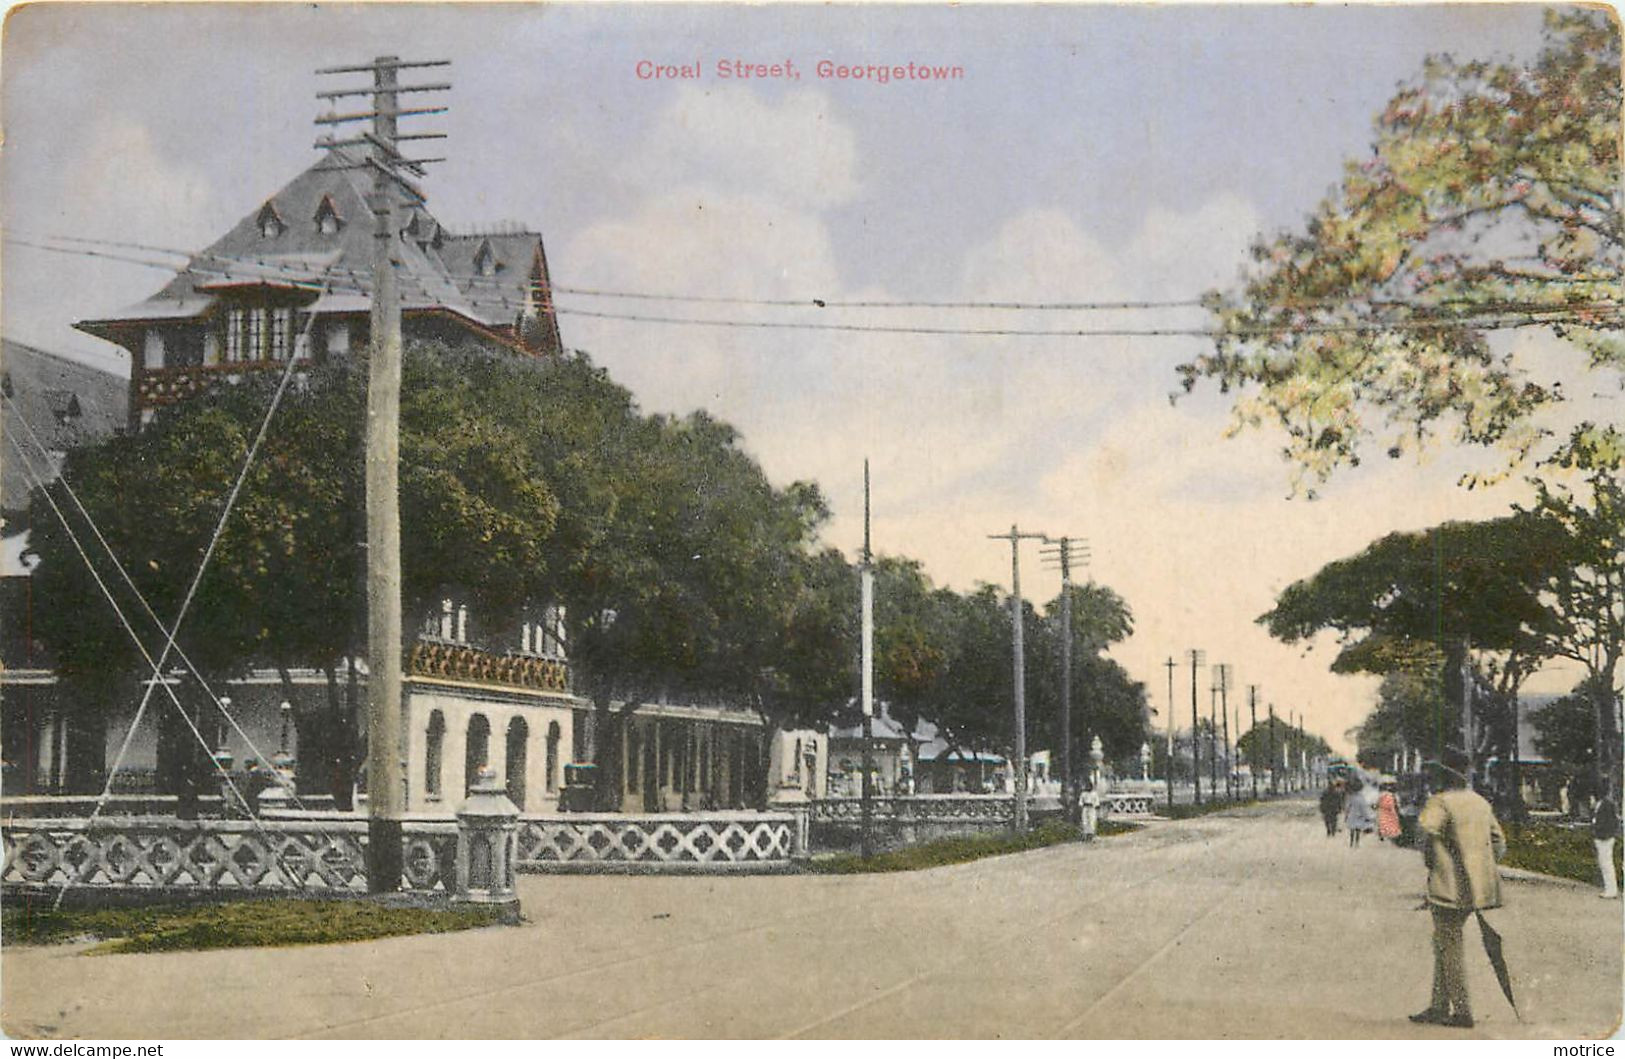 GEORGETOWN - Croal Street. - Guyana (ehemals Britisch-Guayana)